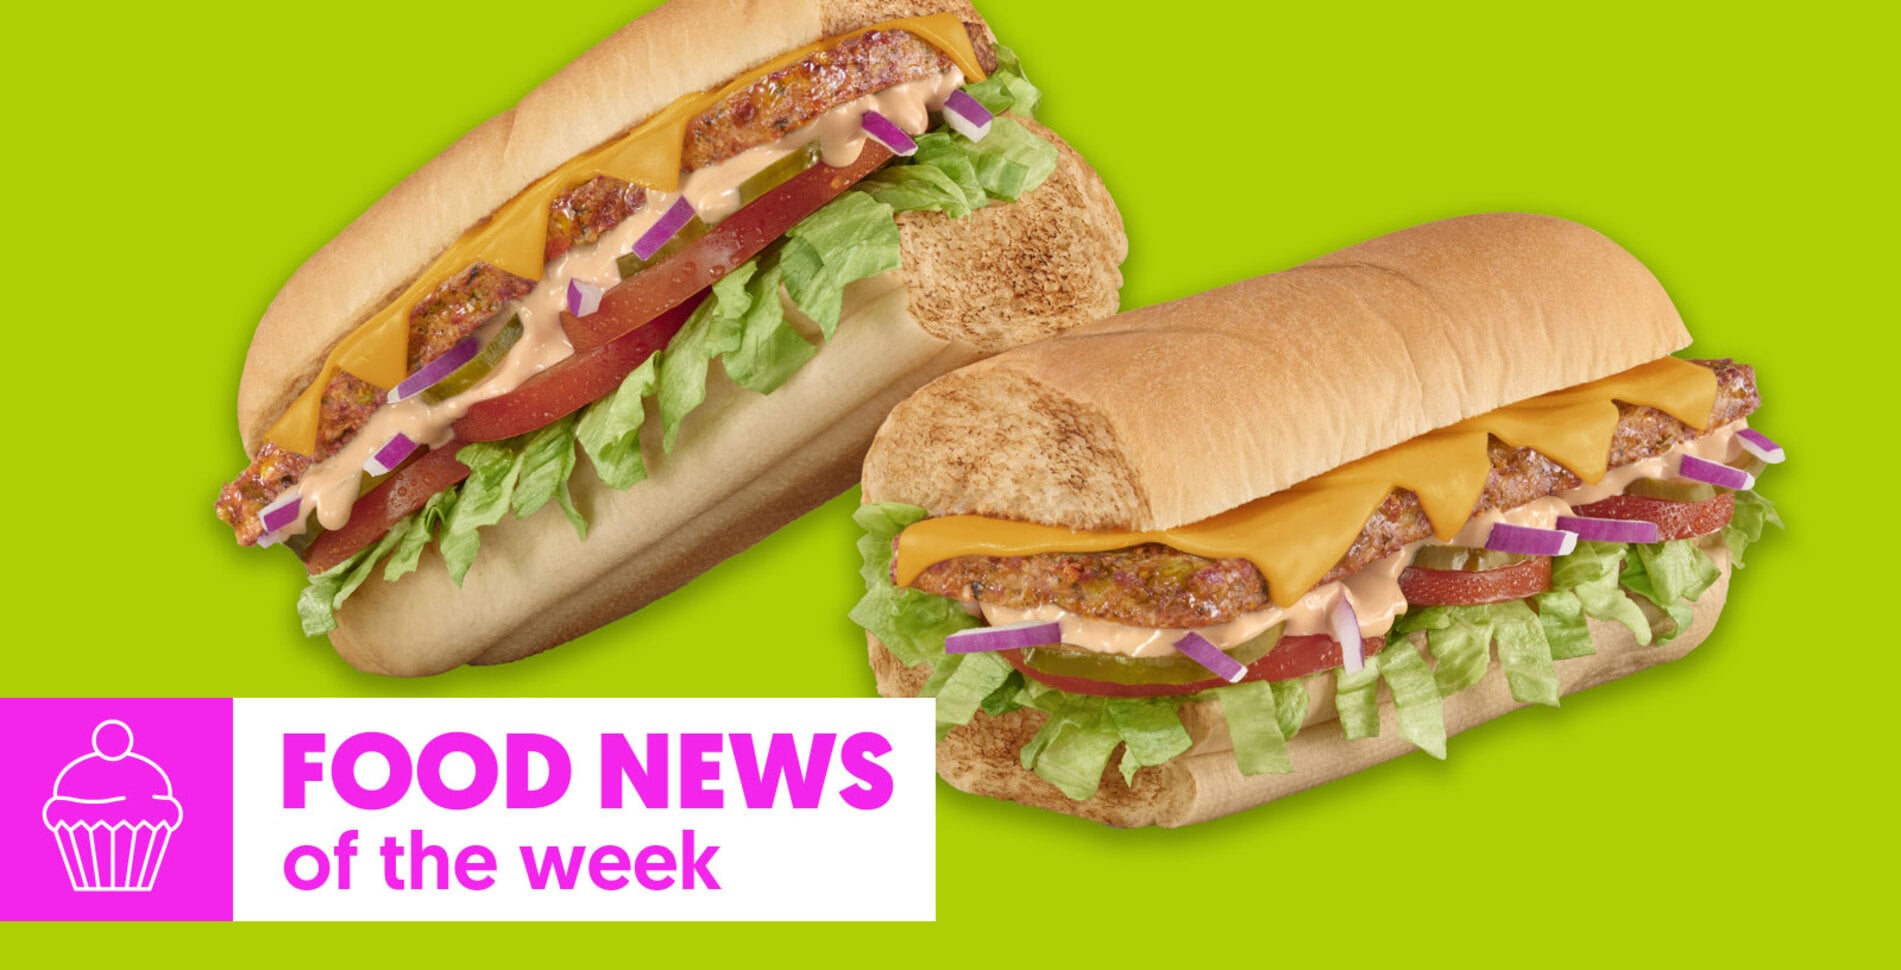 Food News of the Week: 4 New Meatless Subway Subs, Florida Gets 40 Vegan Burger Restaurants, Plus Tofurky’s New Hot Dogs